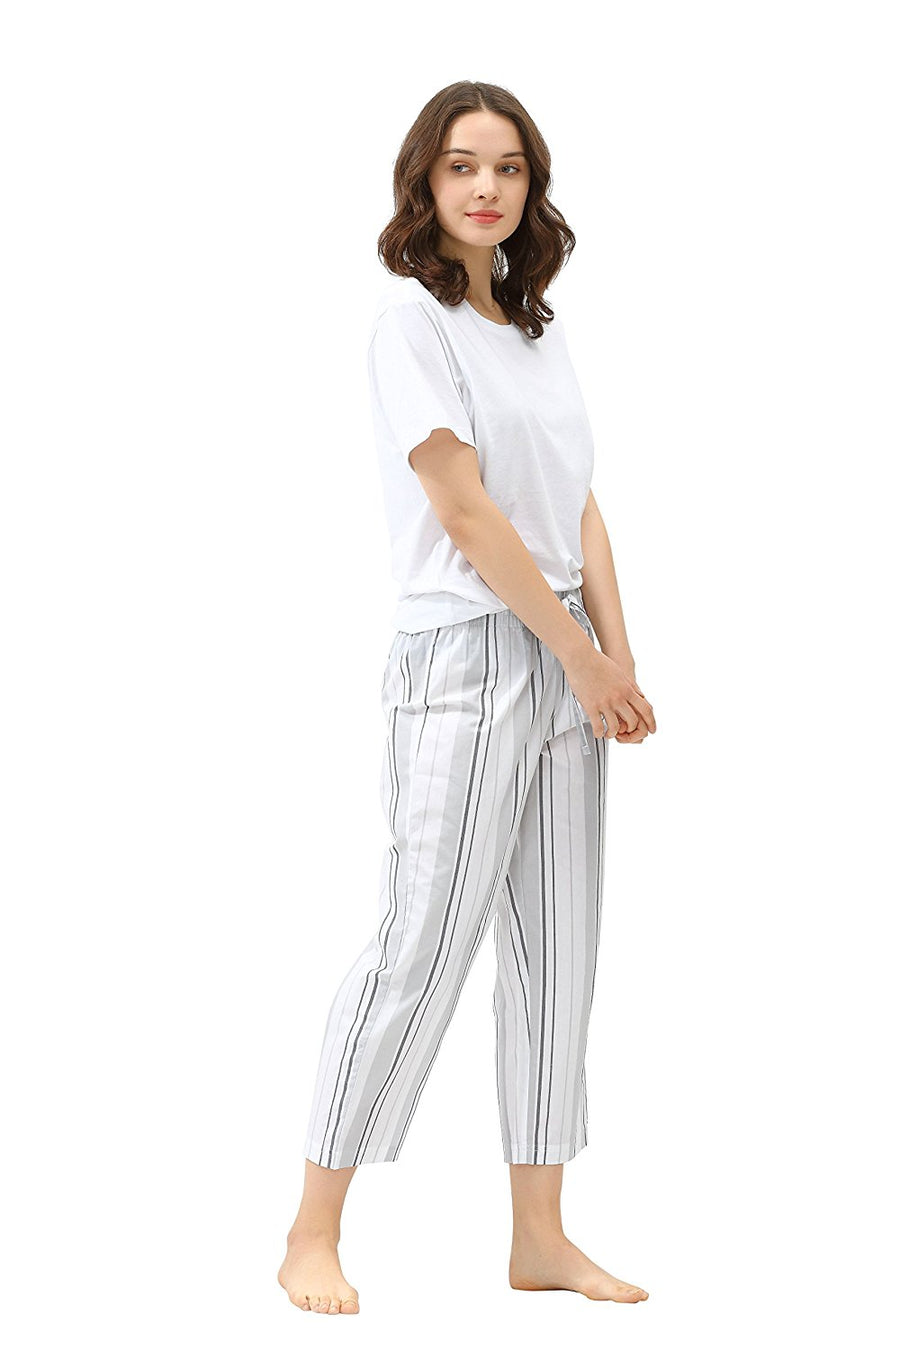 Compre Nisanca Women Capri Pajama Set %100 Cotton Special for Mother's Day  Fırst Quality Fabric